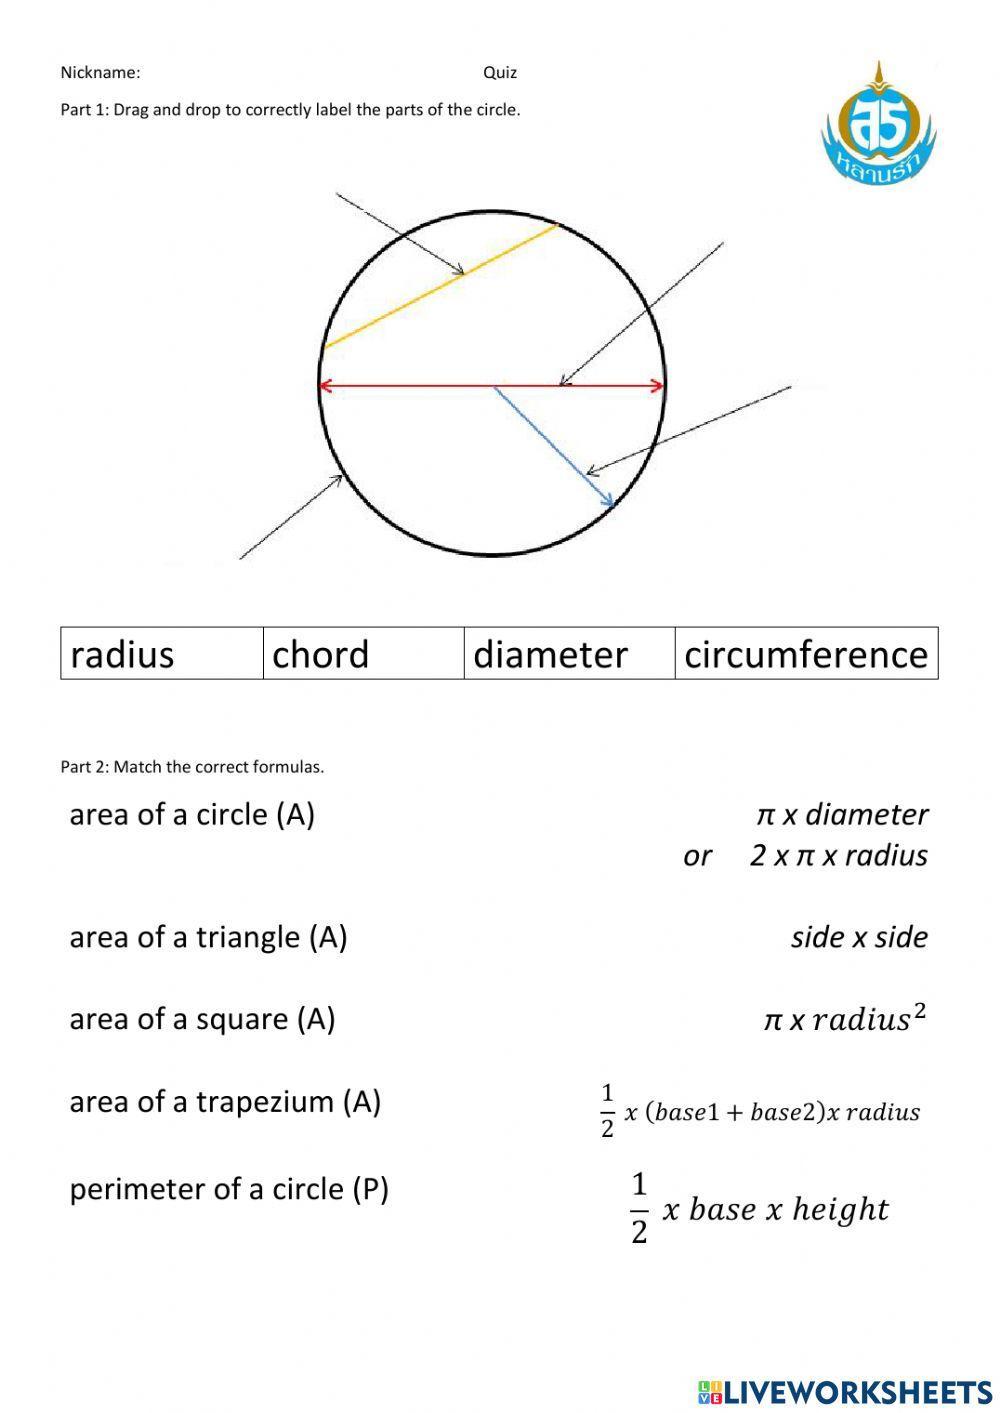 Parts, area, and perimeter of circles